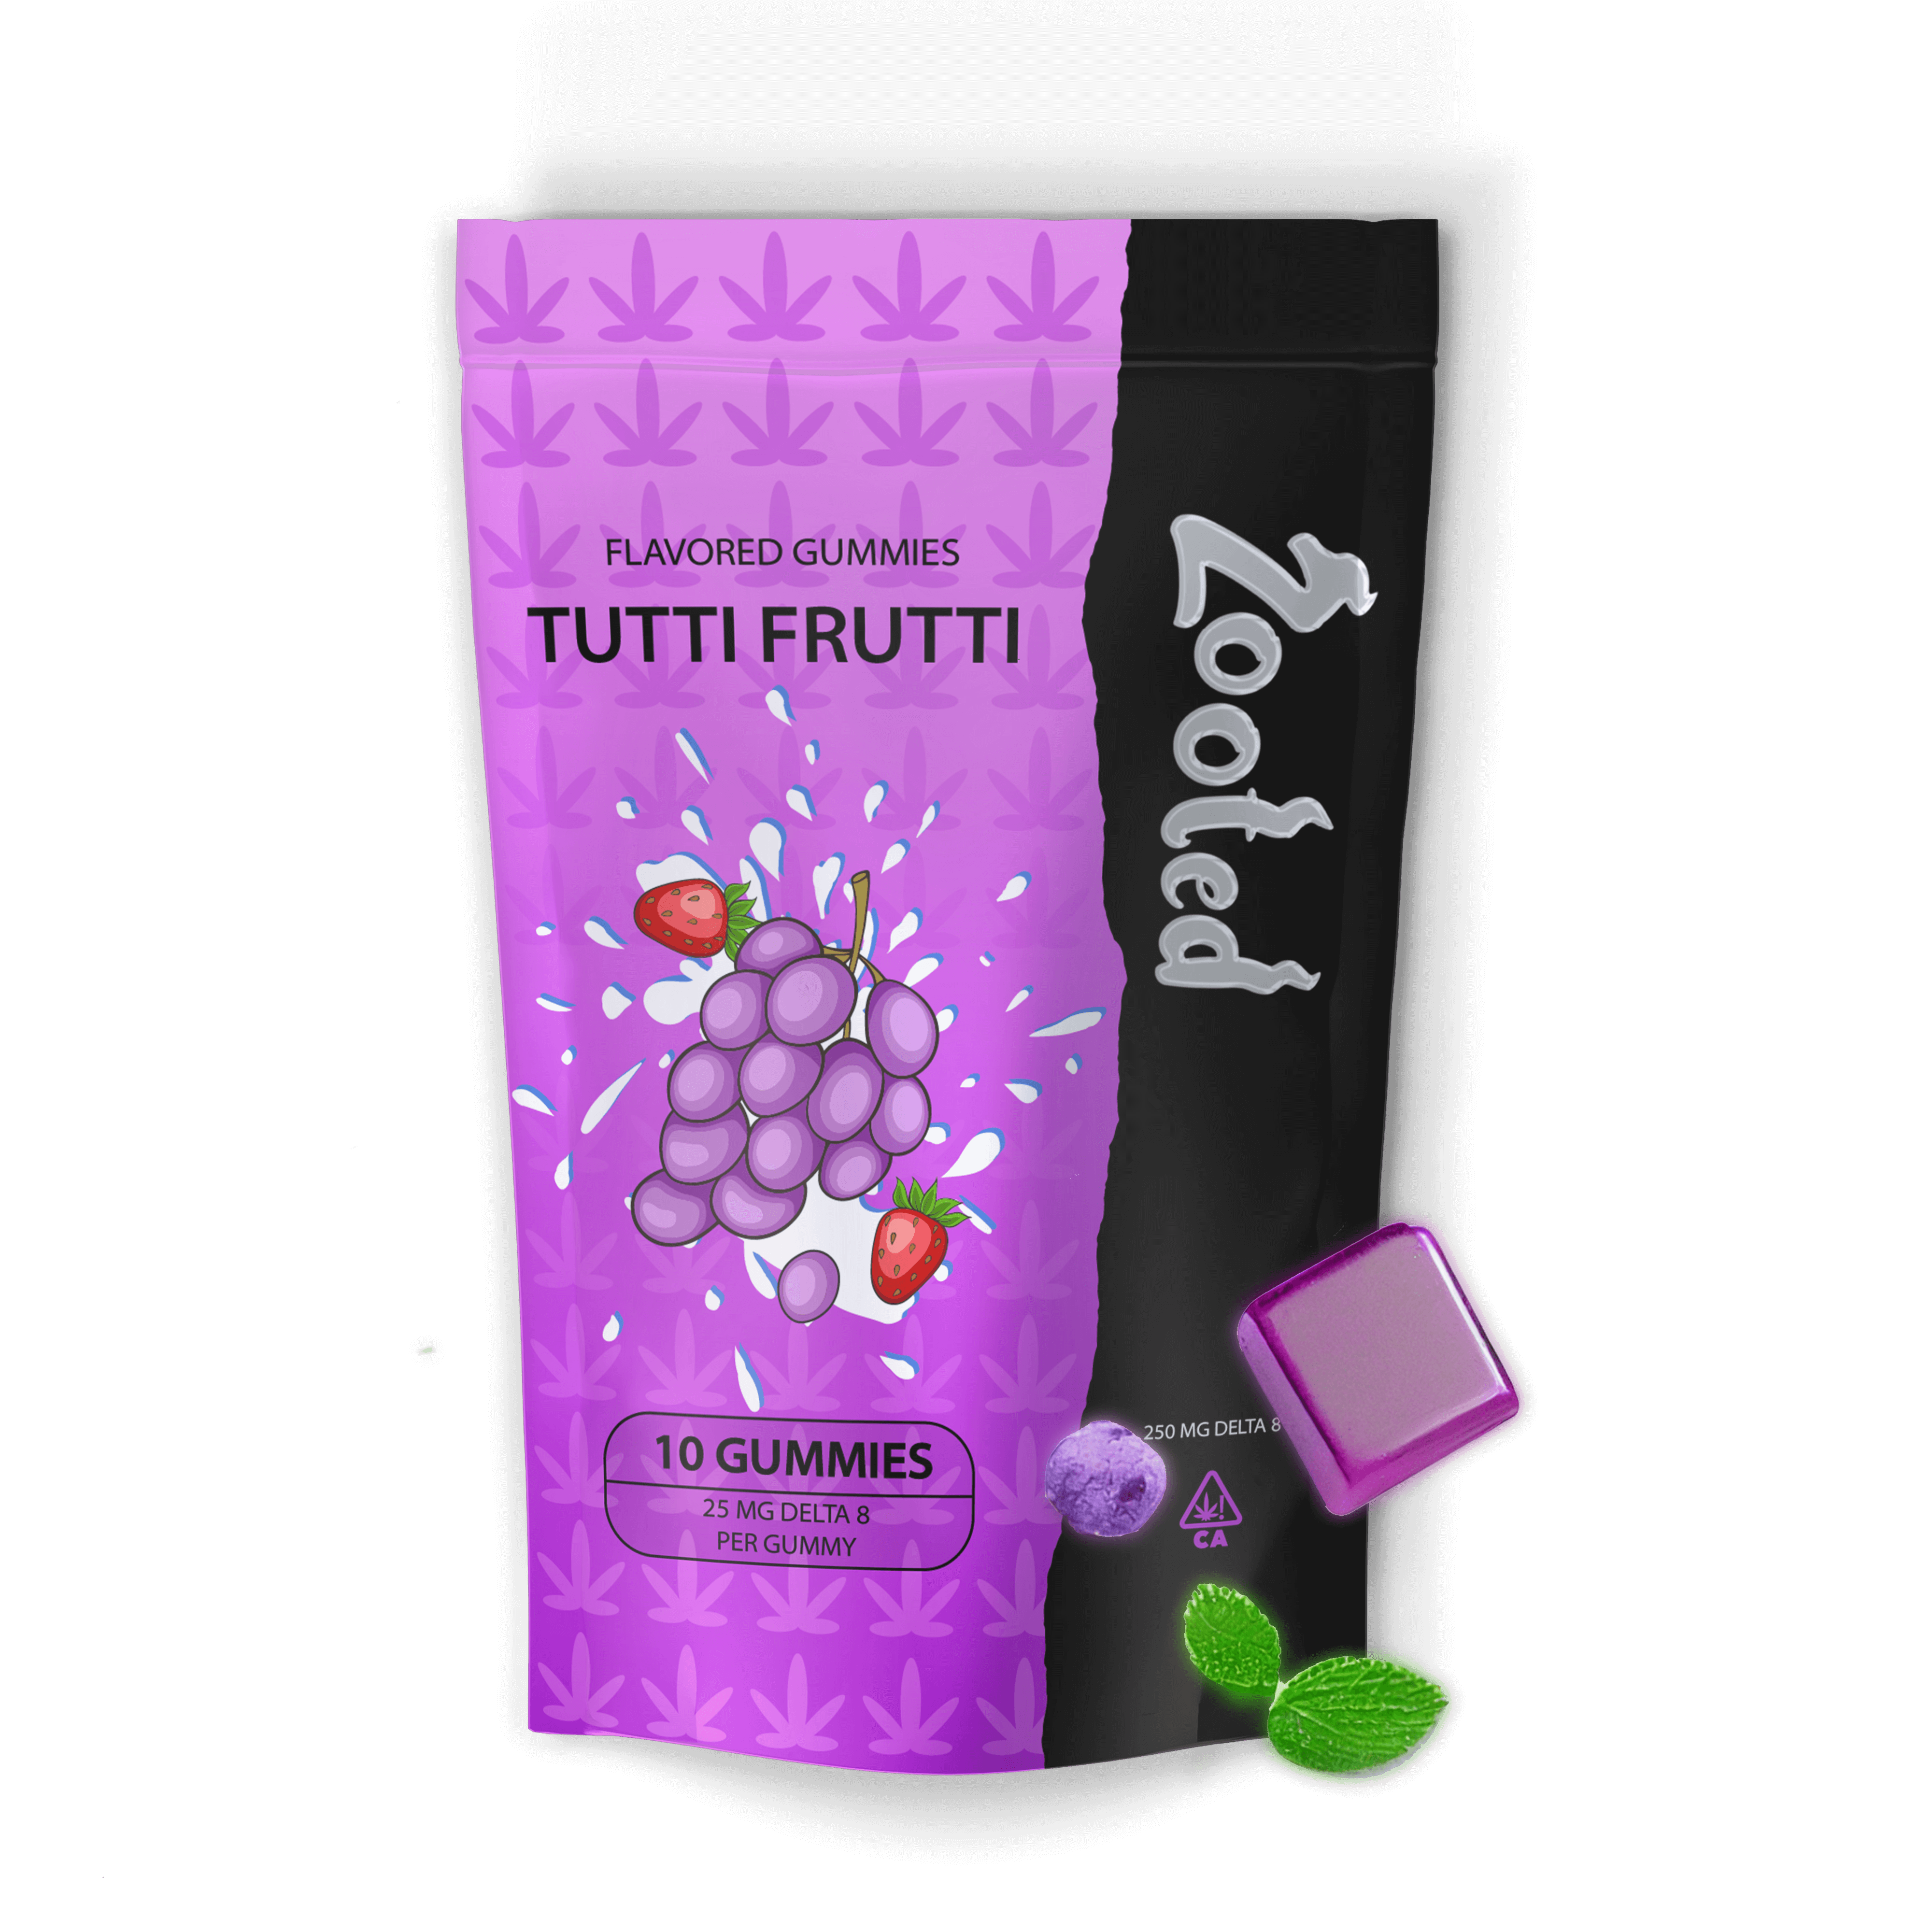 Premium Delta 8 THC gummies in Tutti Frutti flavor - Zooted's cannabis edibles